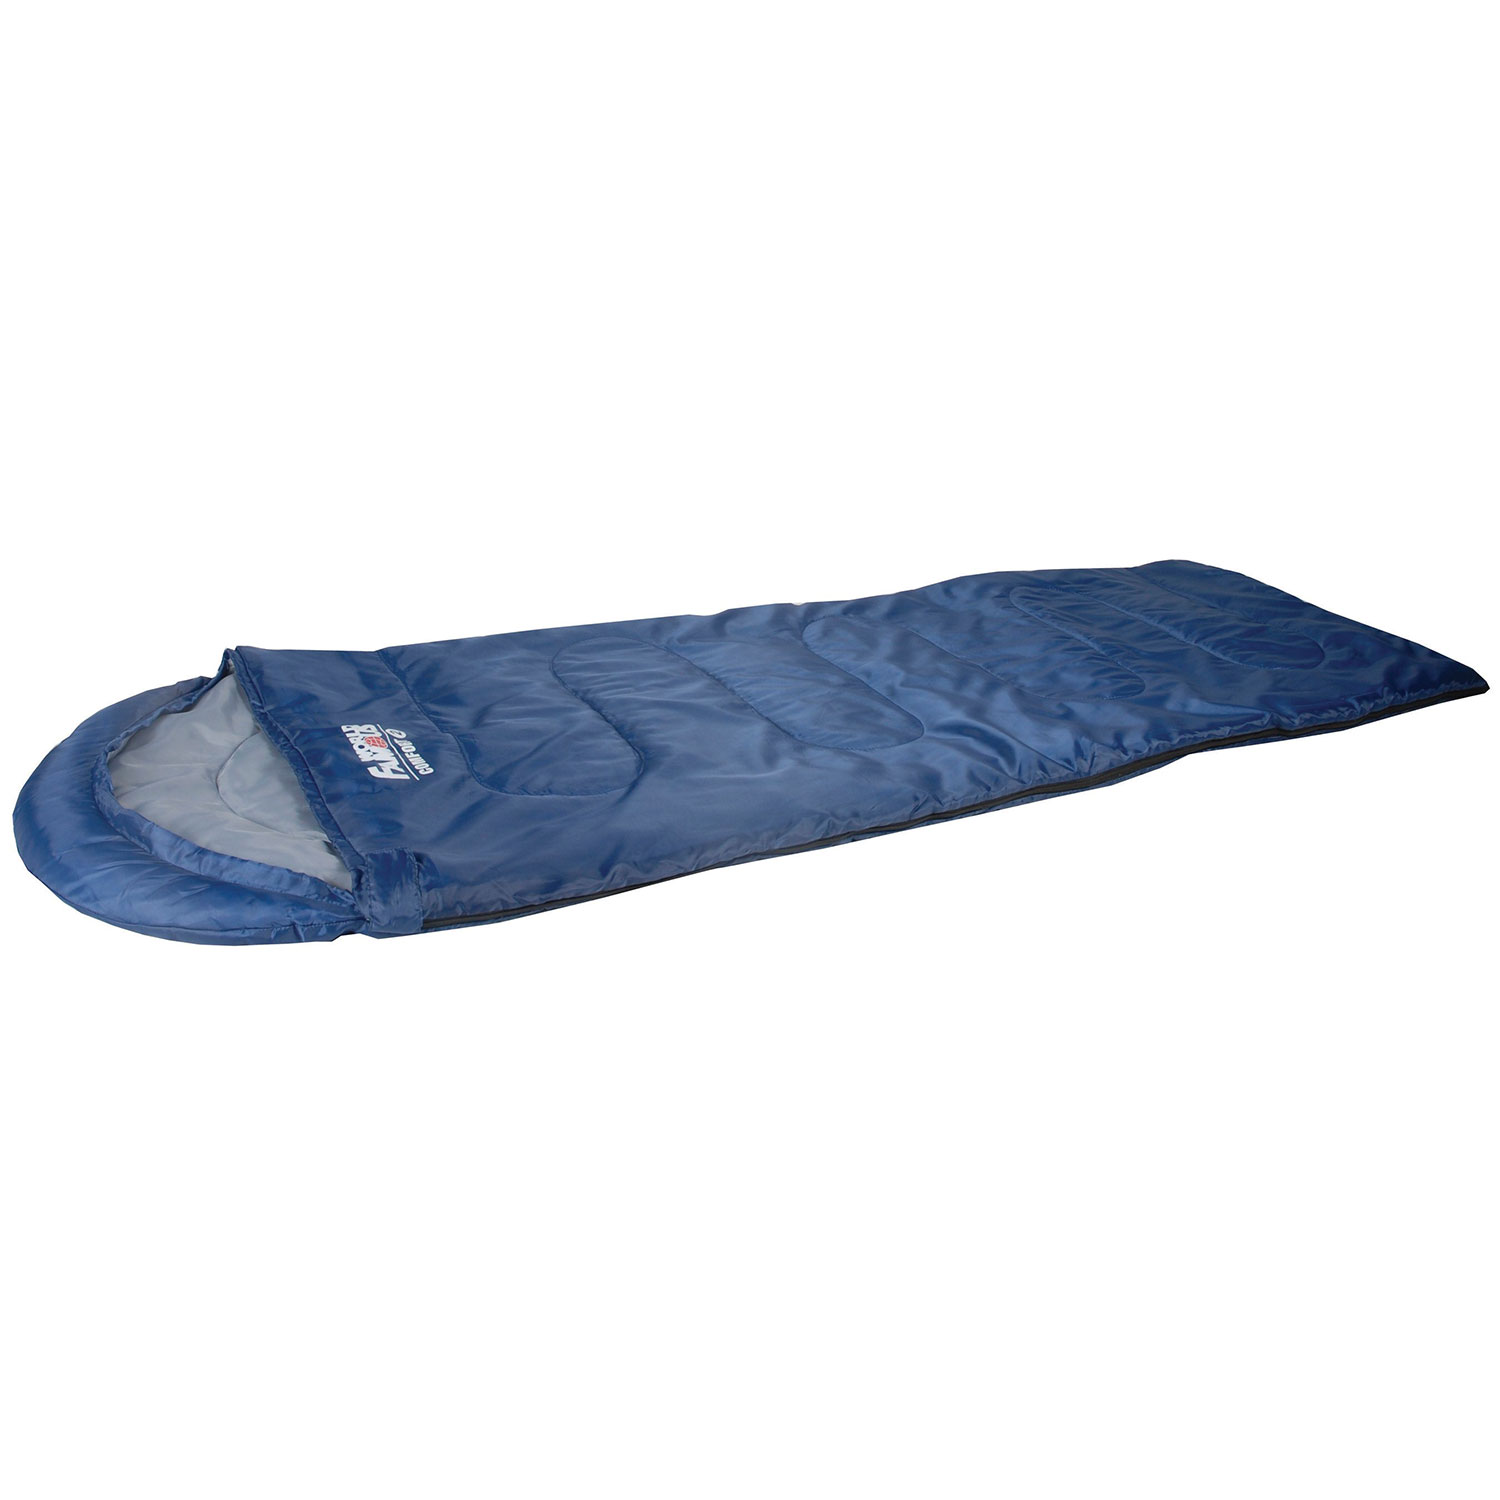 North 49 Comfort 2 Rectangular 10-Degrees Celcius Sleeping Bag - Blue